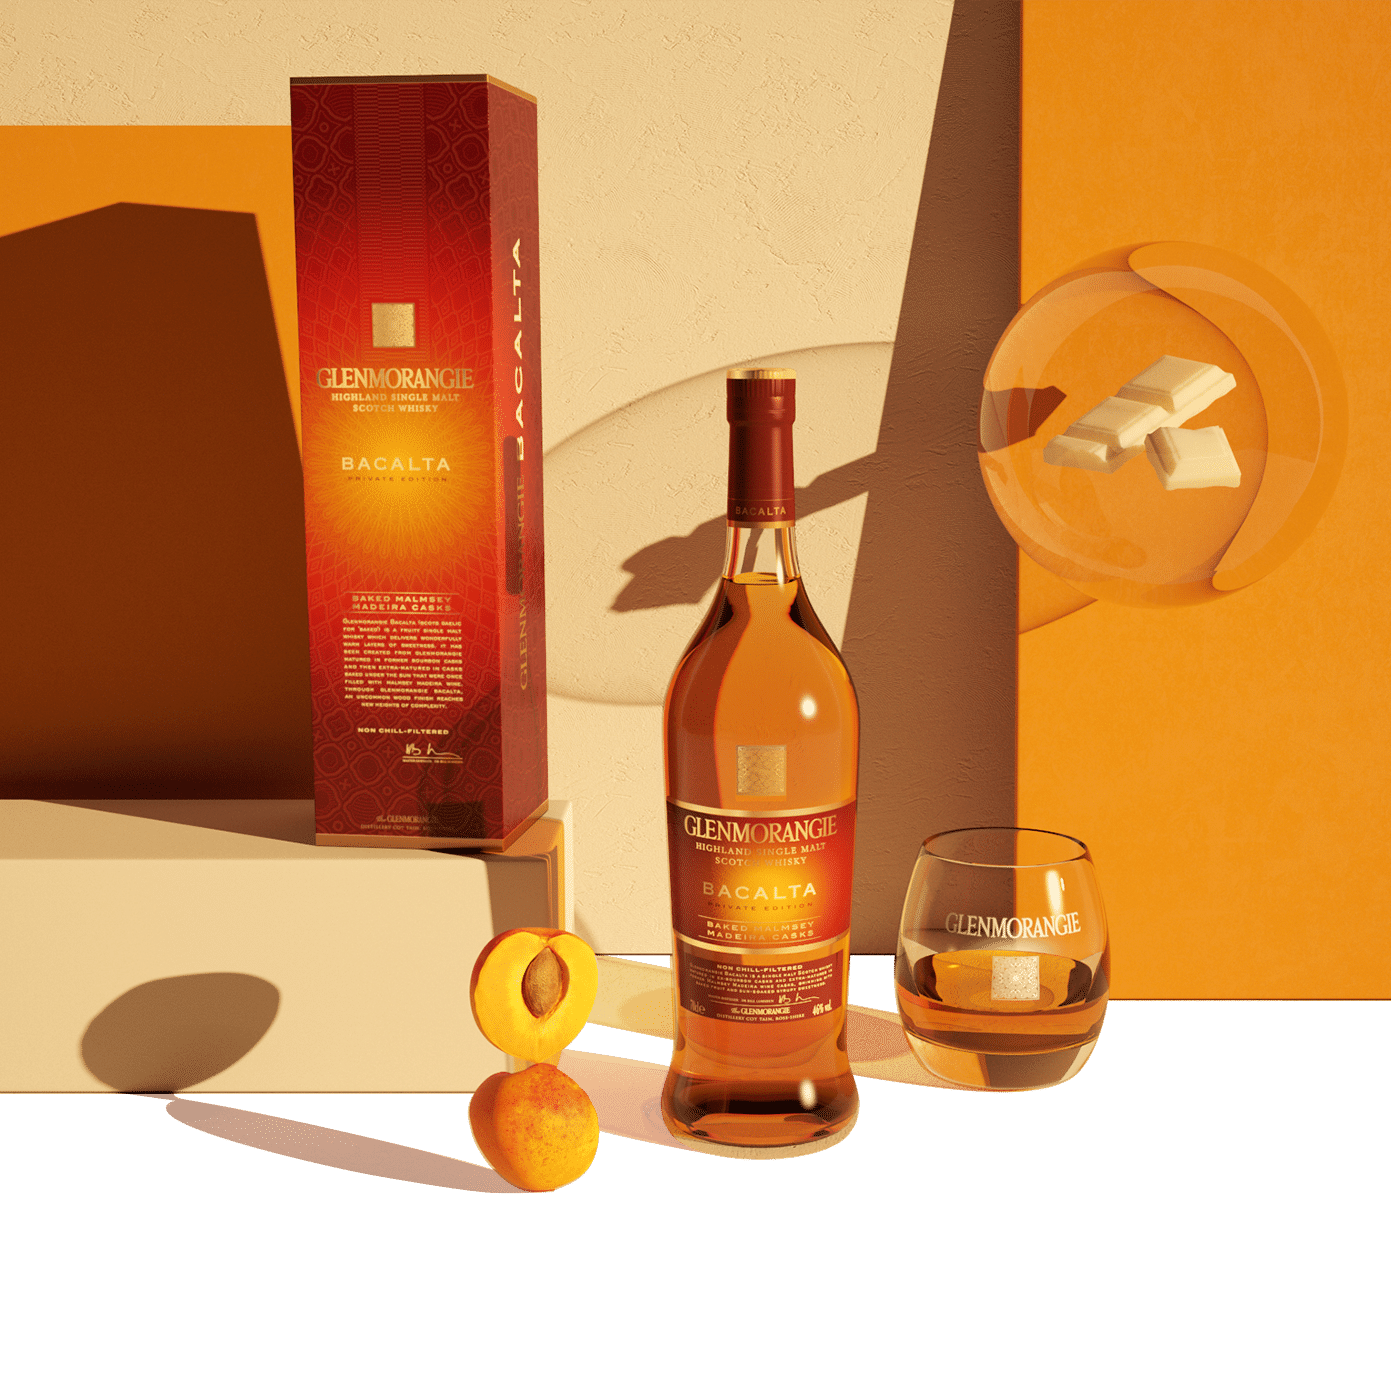 Single-malt sensation: Why Glenmorangie’s Bacalta tastes like liquid sunshine